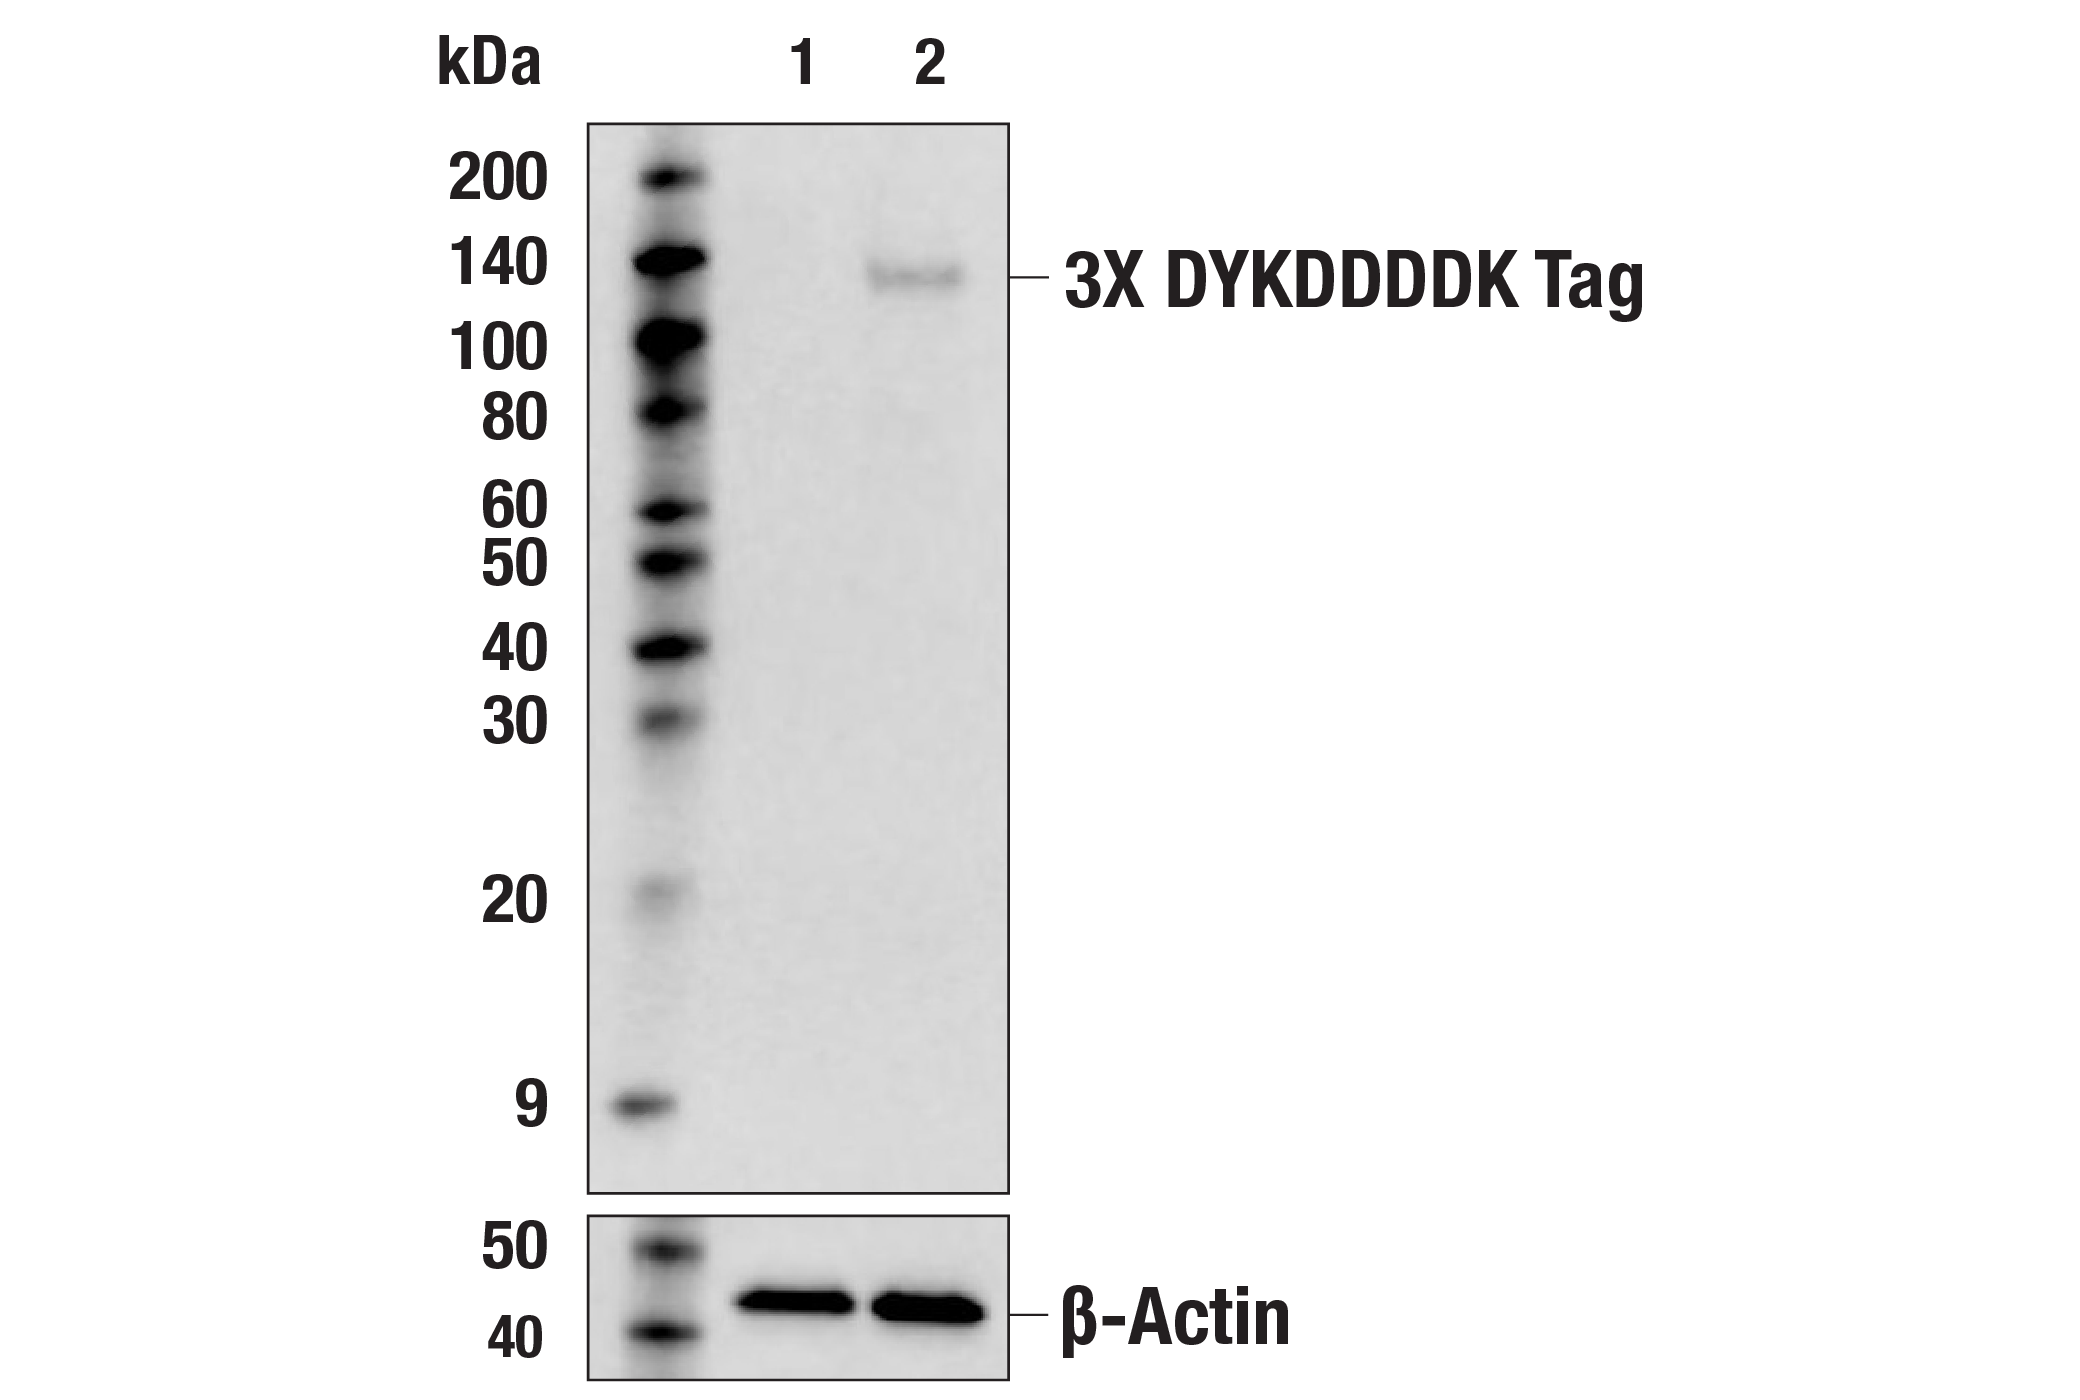 Western Blotting Image 1: 3X DYKDDDDK Tag (E2T2J) Mouse mAb (Binds to same epitope as Sigma-Aldrich Anti-FLAG M2 antibody) (HRP Conjugate)